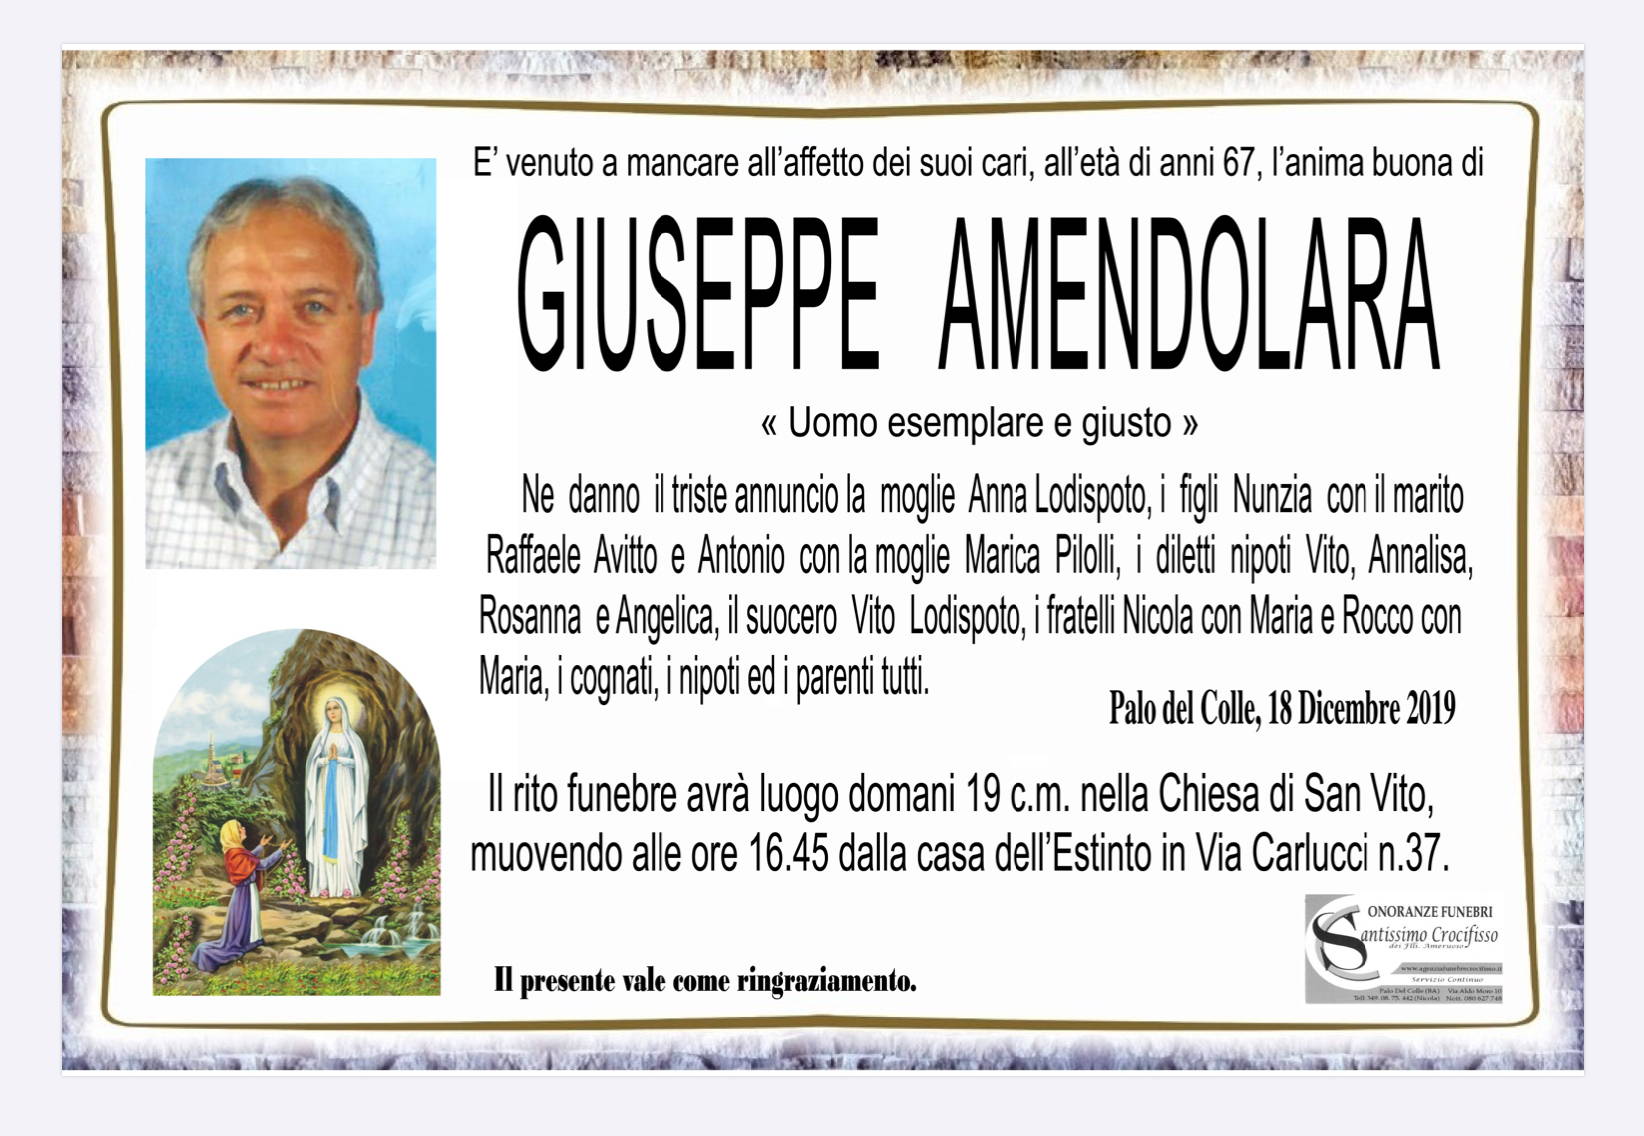 Giuseppe Amendolara